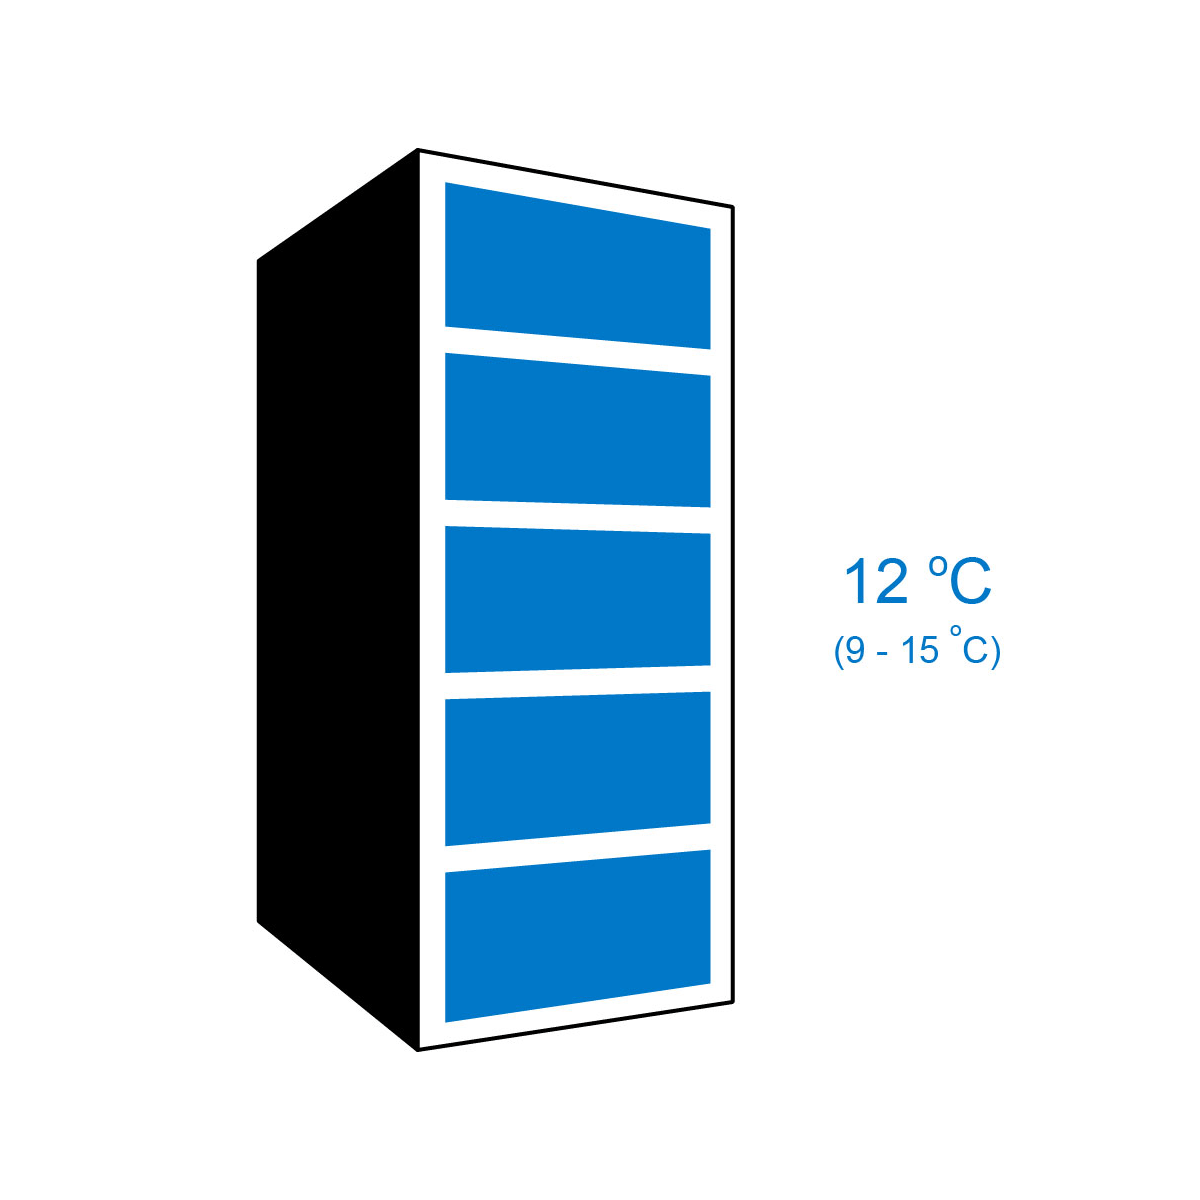 【Eurocave】V-PREM-S Maturing 1 temperature wine cabinet Première, Small model